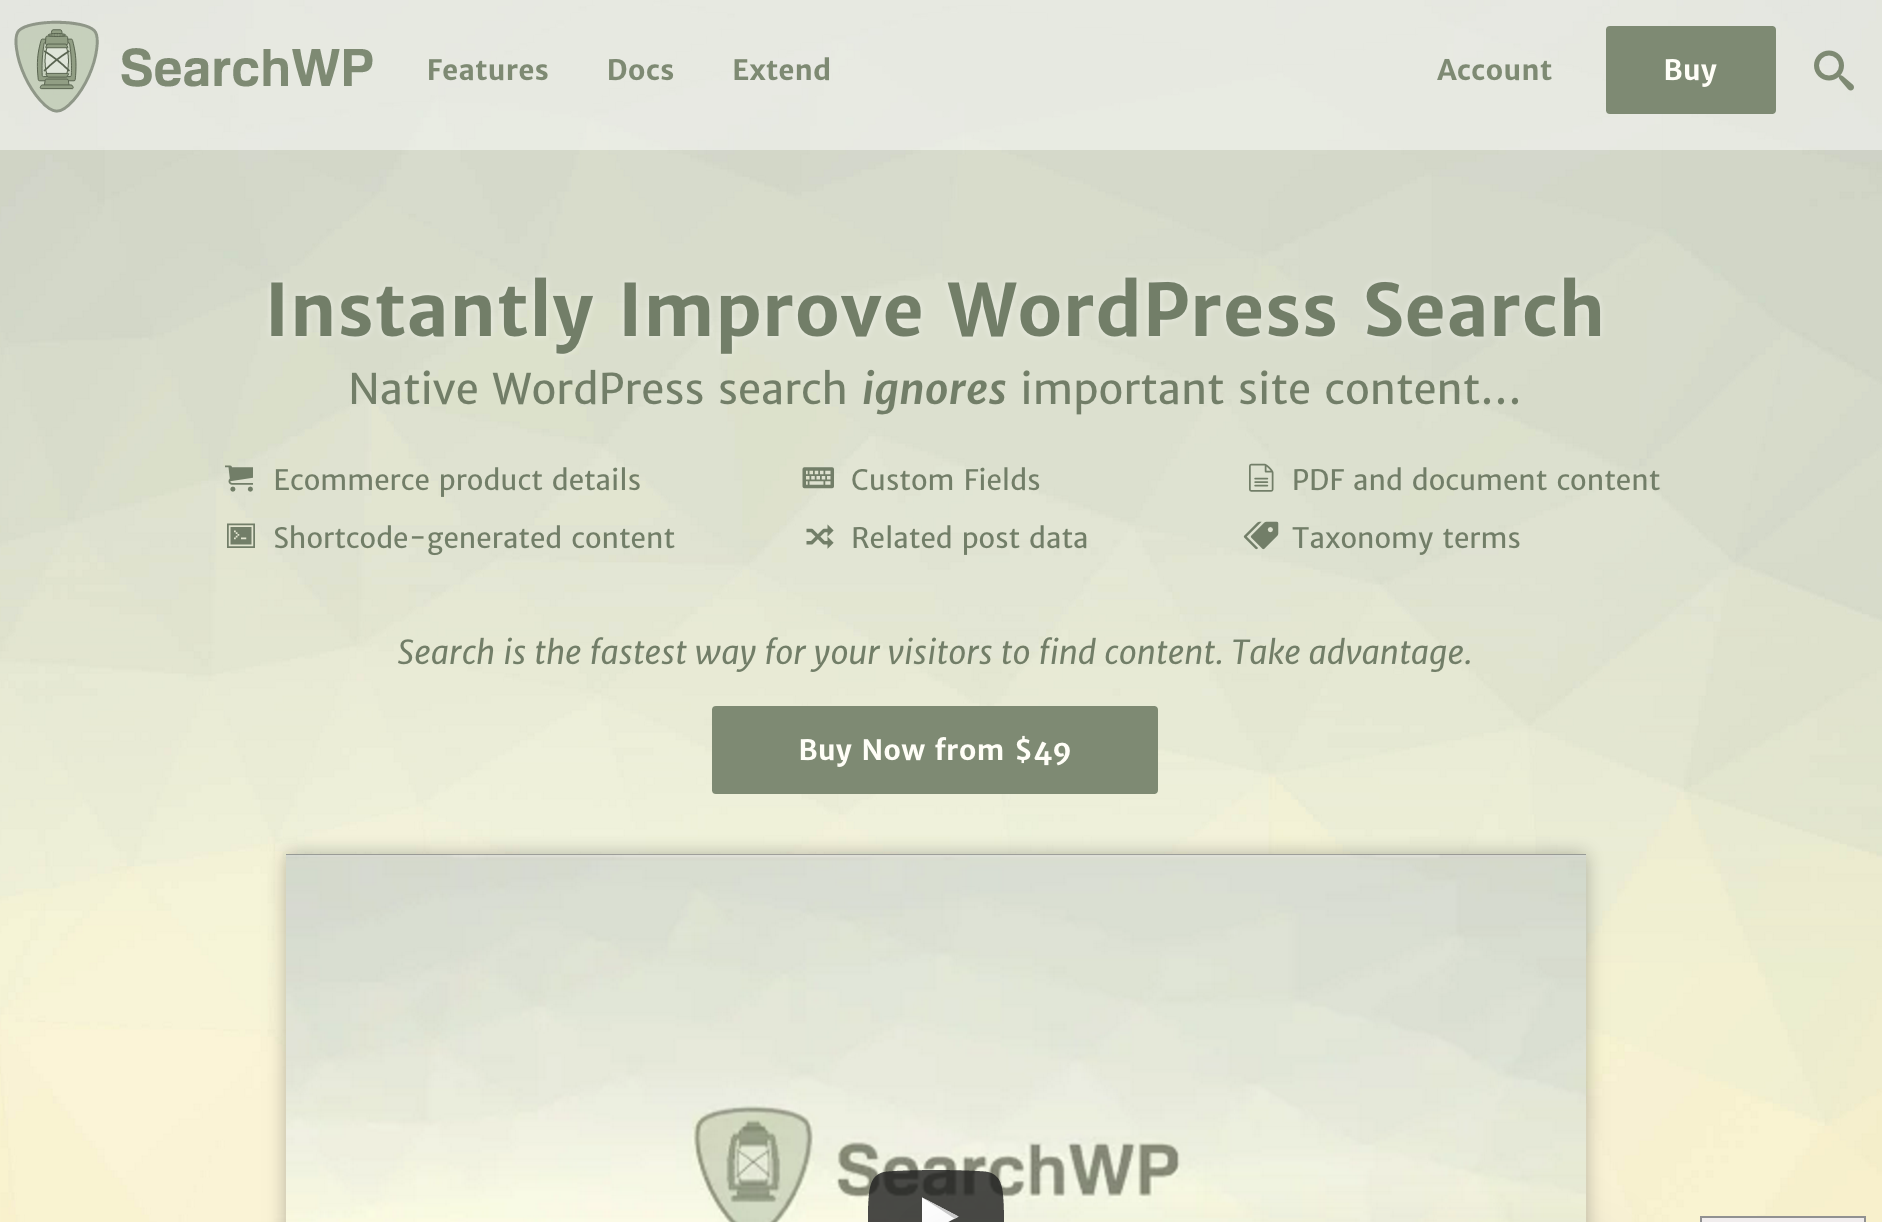 Screenshot of SearchWP website